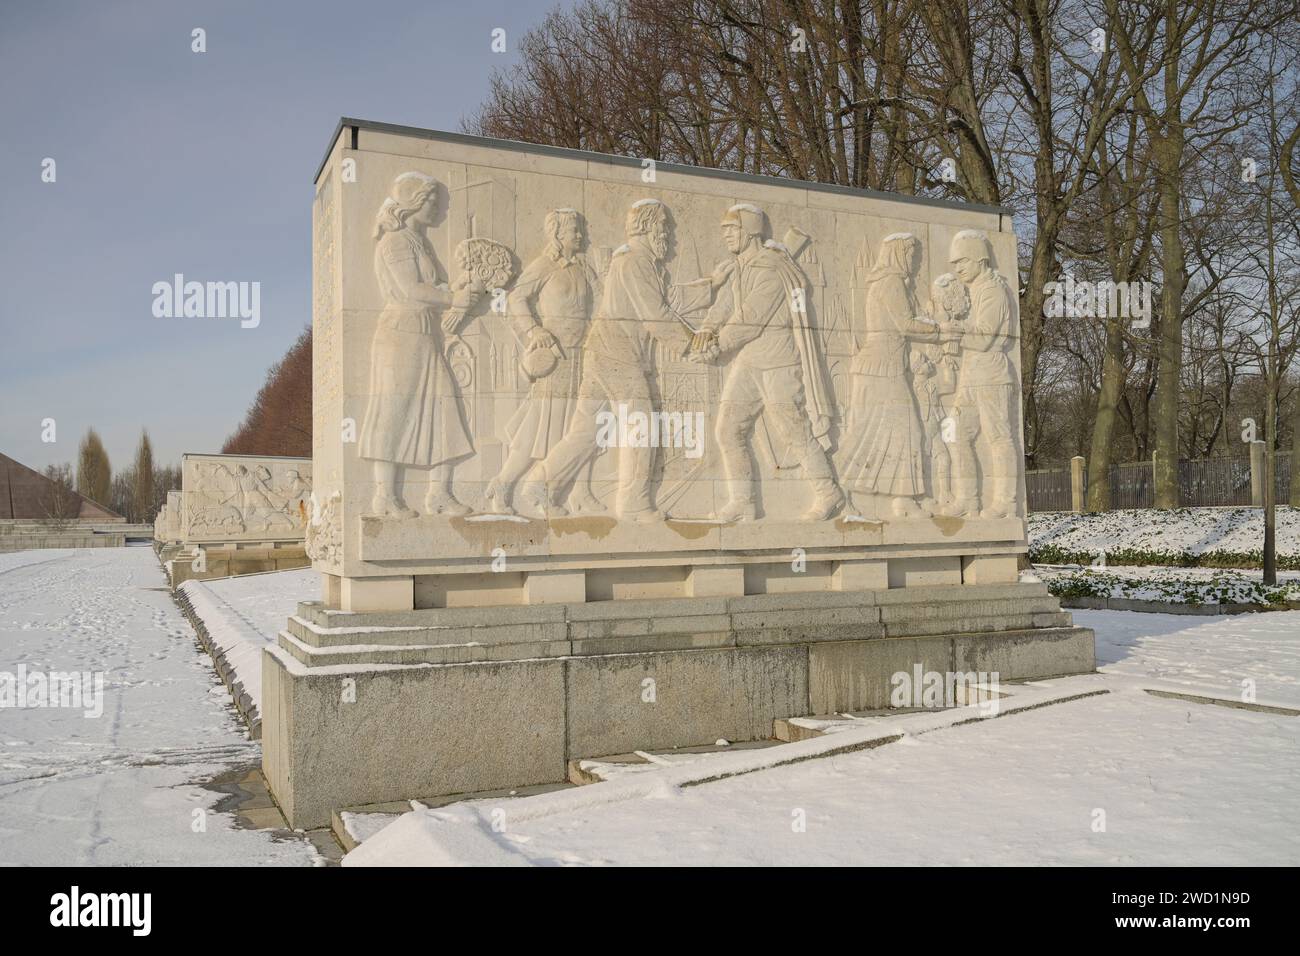 Sarkophag mit Steinrelief, Dank der Zivilbevölkerung an Die Armee, Sowjetisches Ehrenmal, Winter, Treptower Park, Treptow, Treptow-Köpenick, Berlino, D. Foto Stock